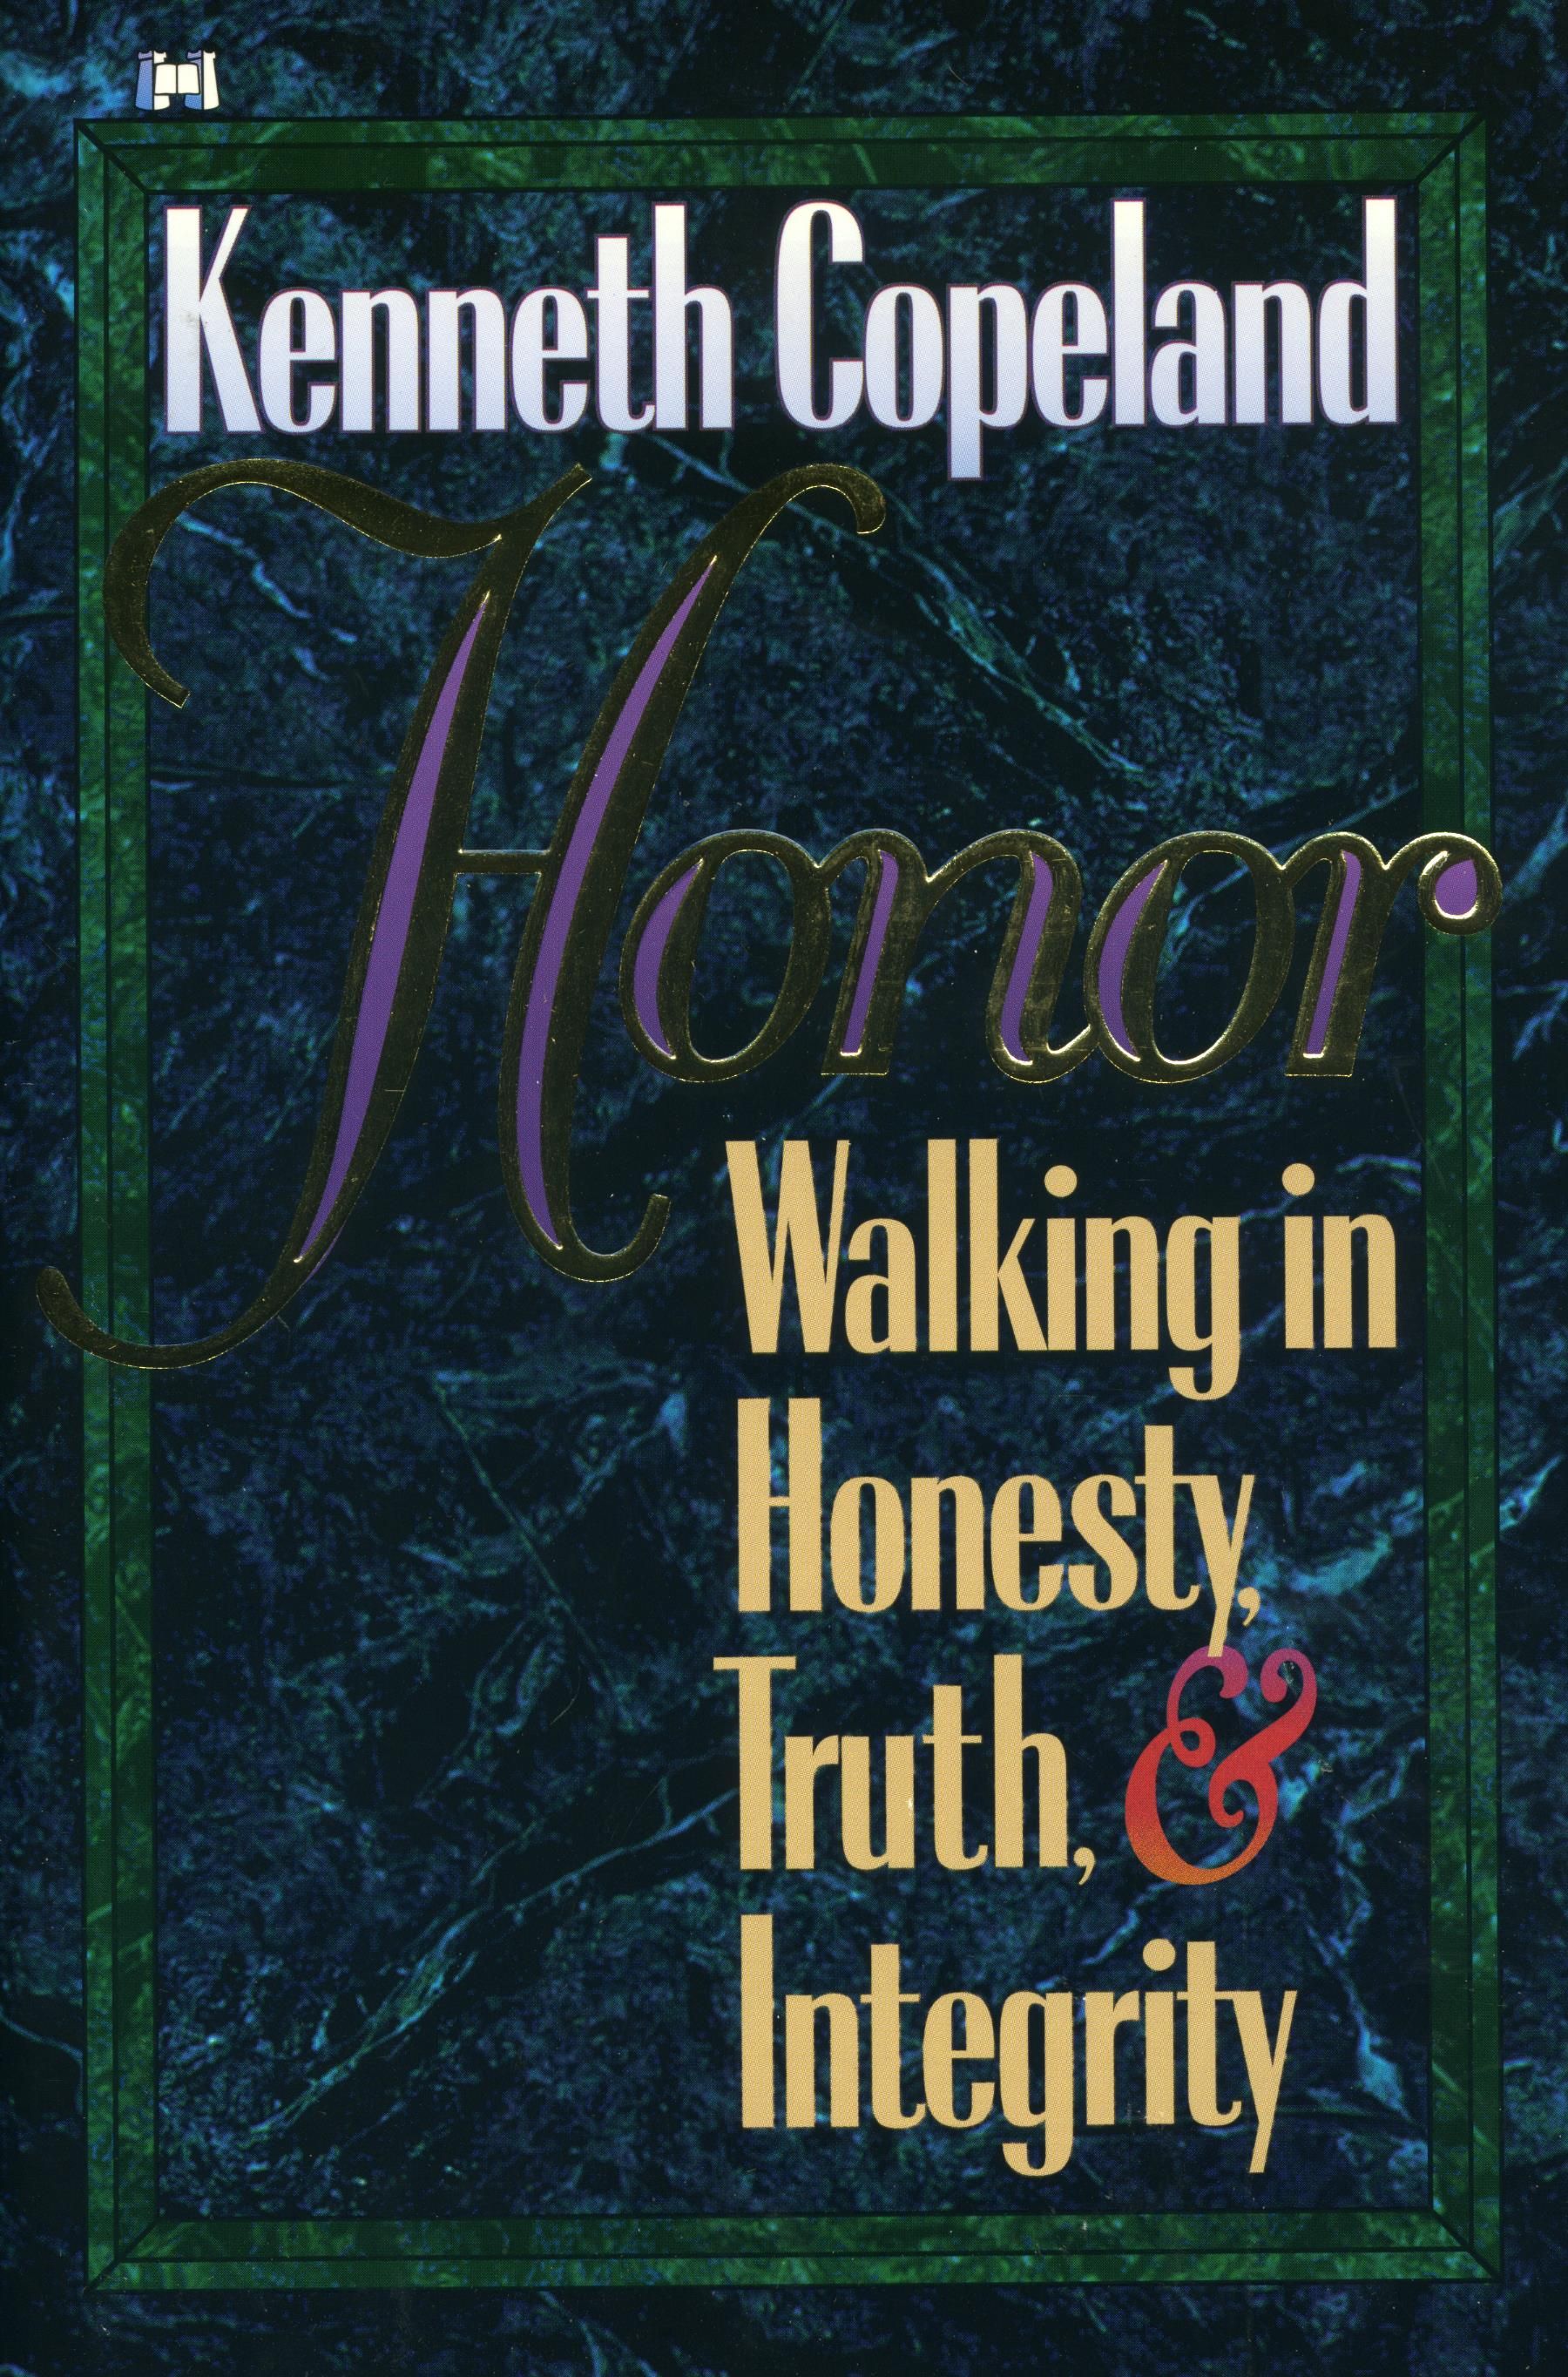 Englische Bücher - K. Copeland: Honor-Walking in Honestry, Truth & Integrity (Paperback)